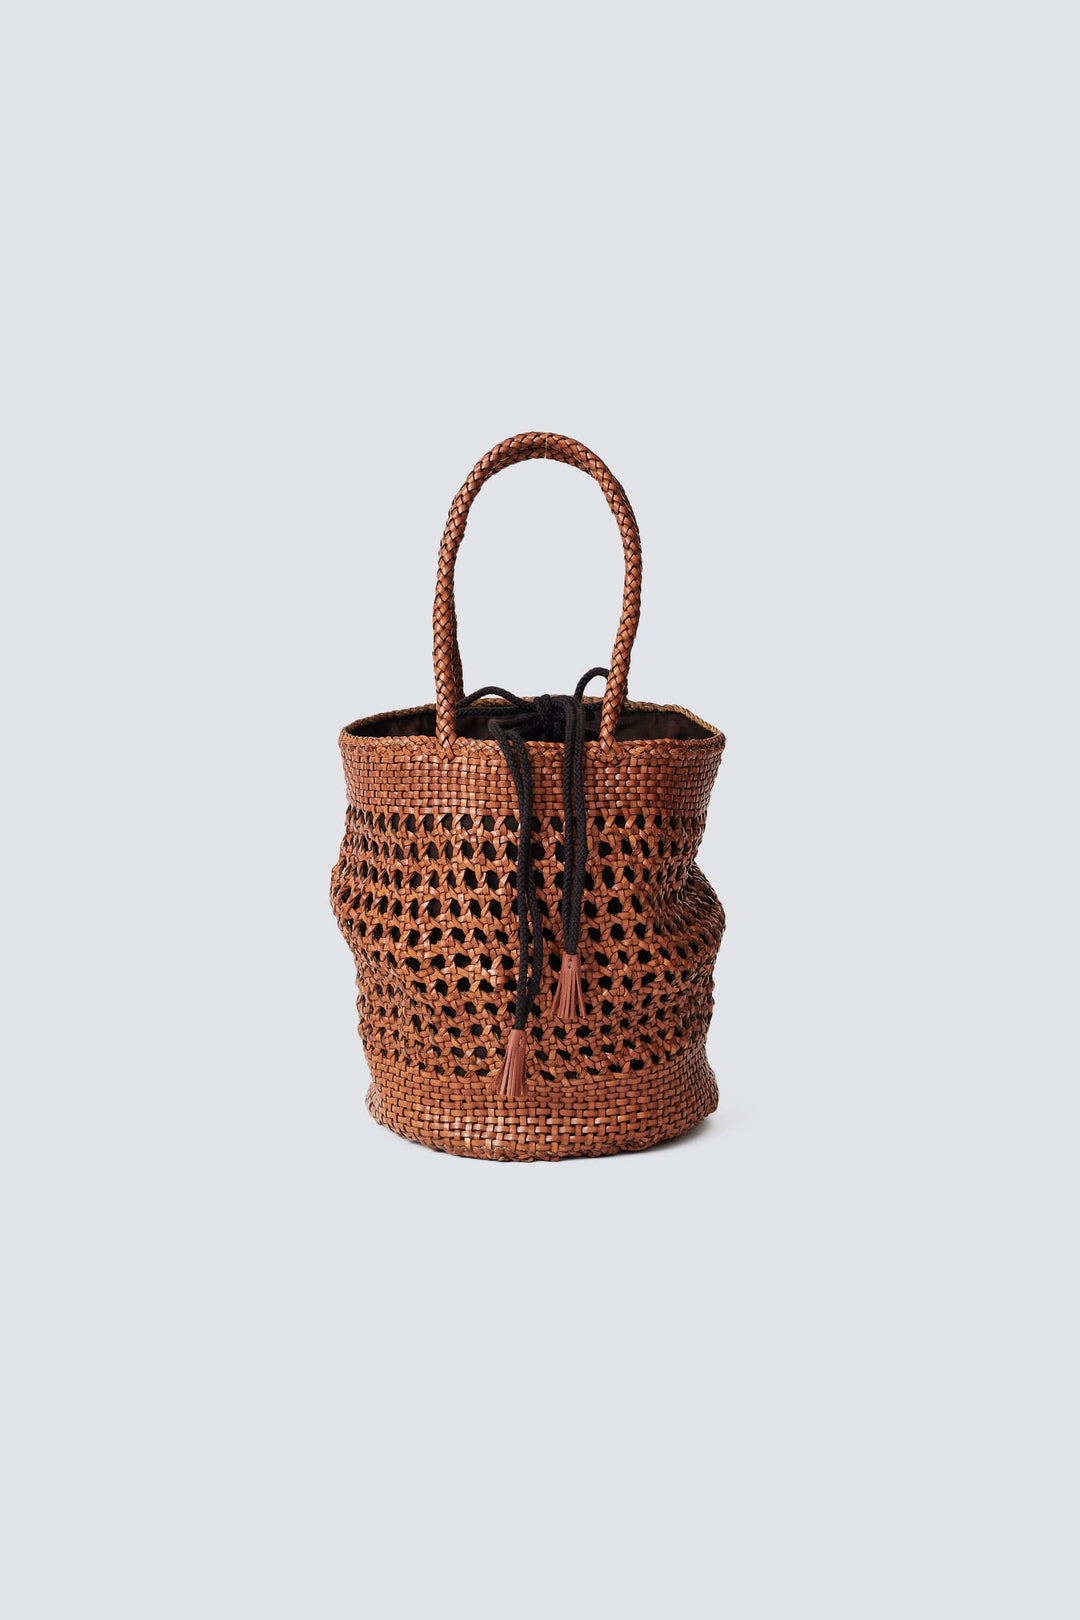 Dragon Diffusion woven leather bag handmade - Big Bucket XXL Tan